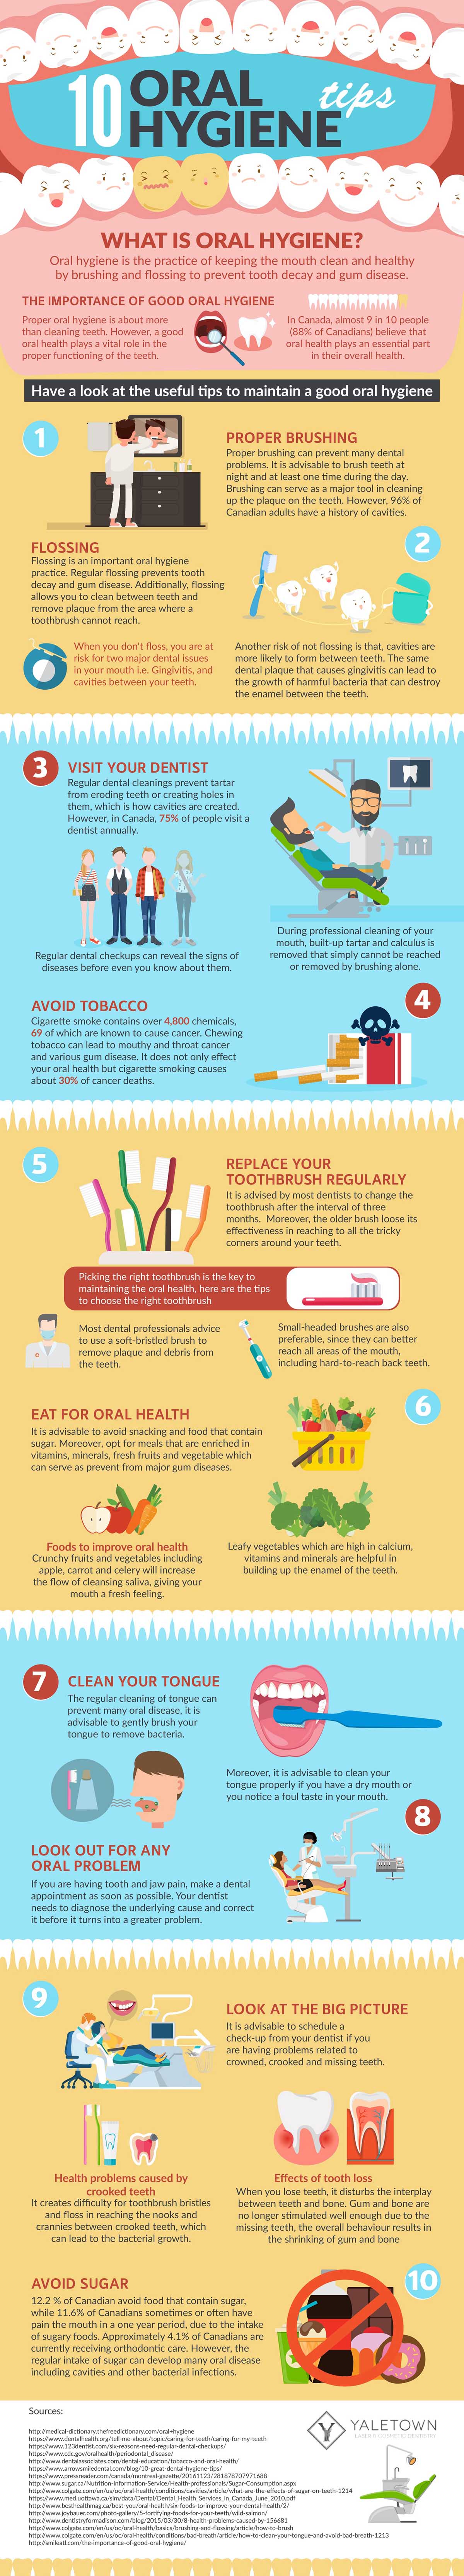 10 Oral Hygiene Tips